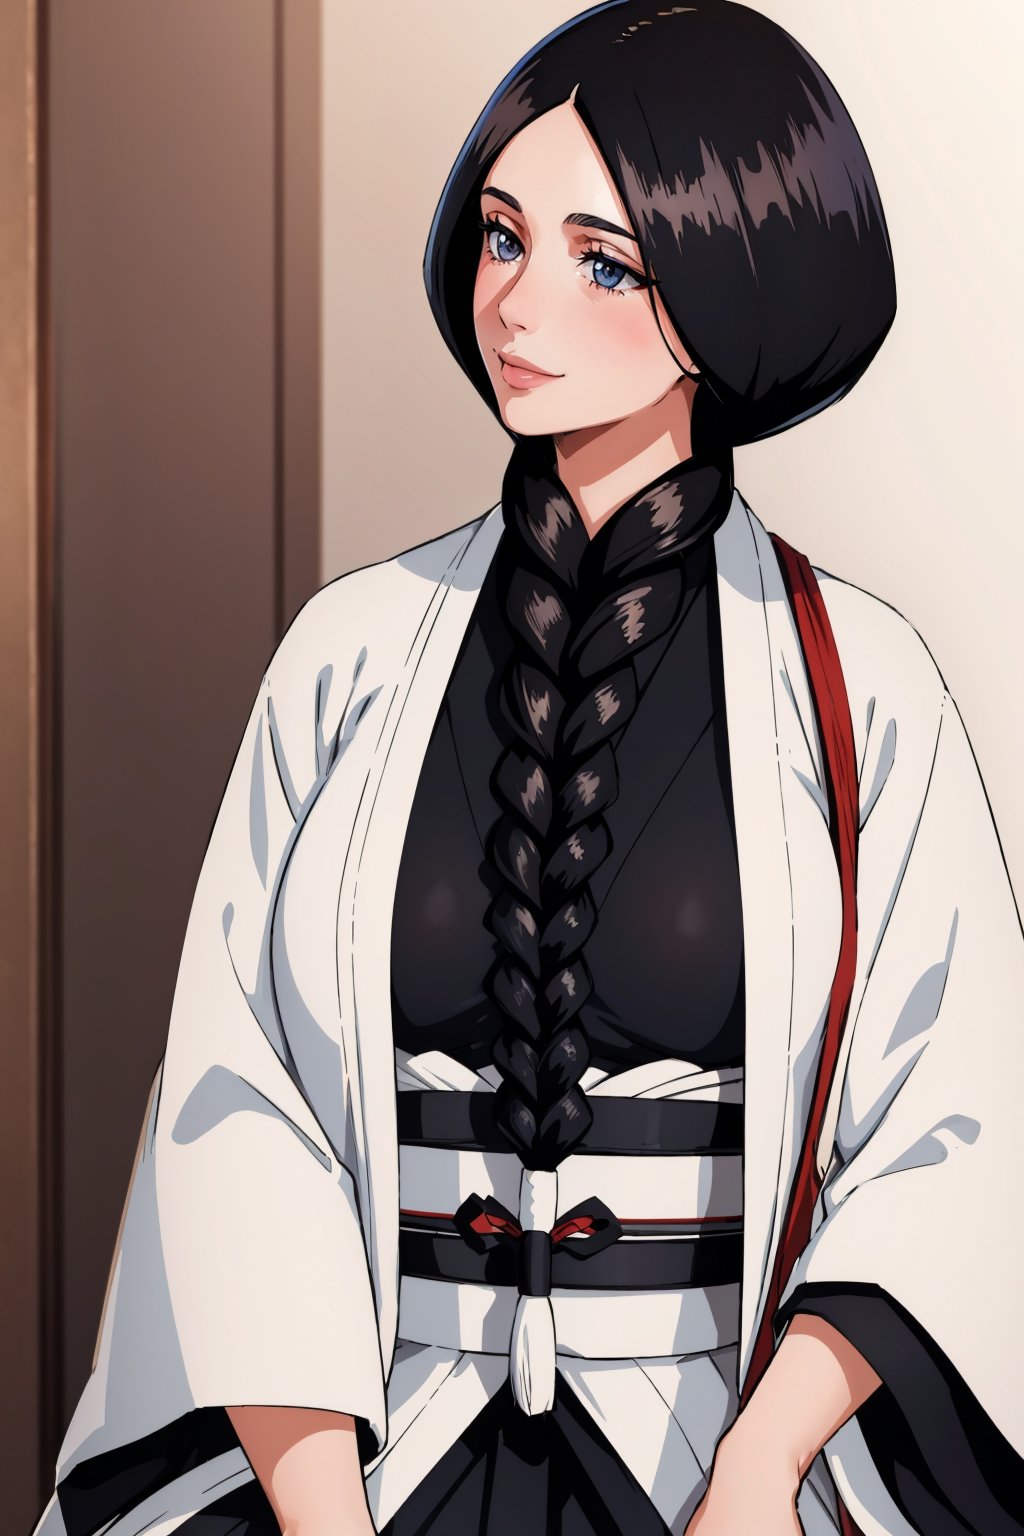 masterpiece, best quality, <lora:unohanaretsu-nvwls-v1-000009:0.9> unohana retsu, single braid, white coat, black kimono, large breasts, mature female, profile, smile, looking up, gradient background, pastel colors